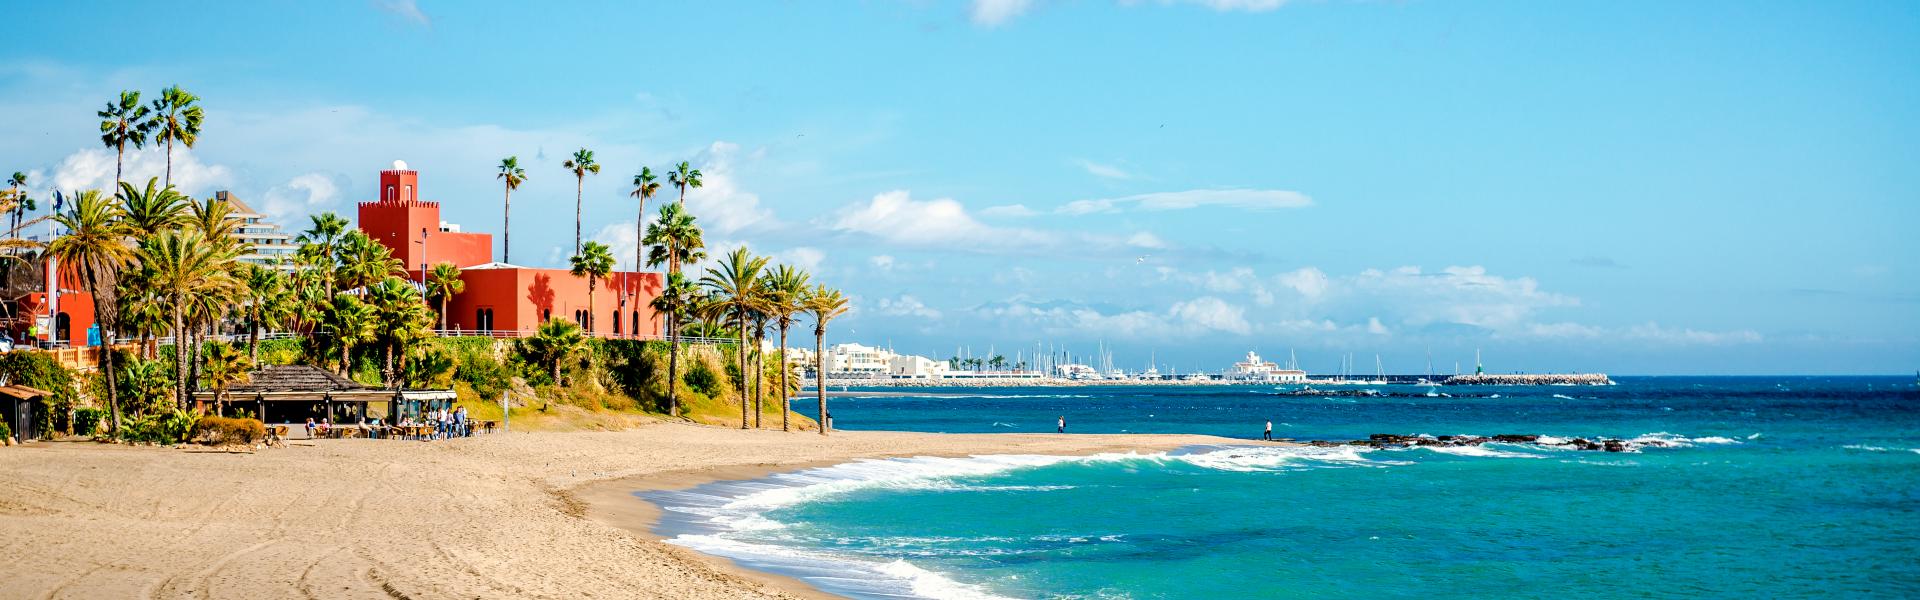 Malaga Coastal View